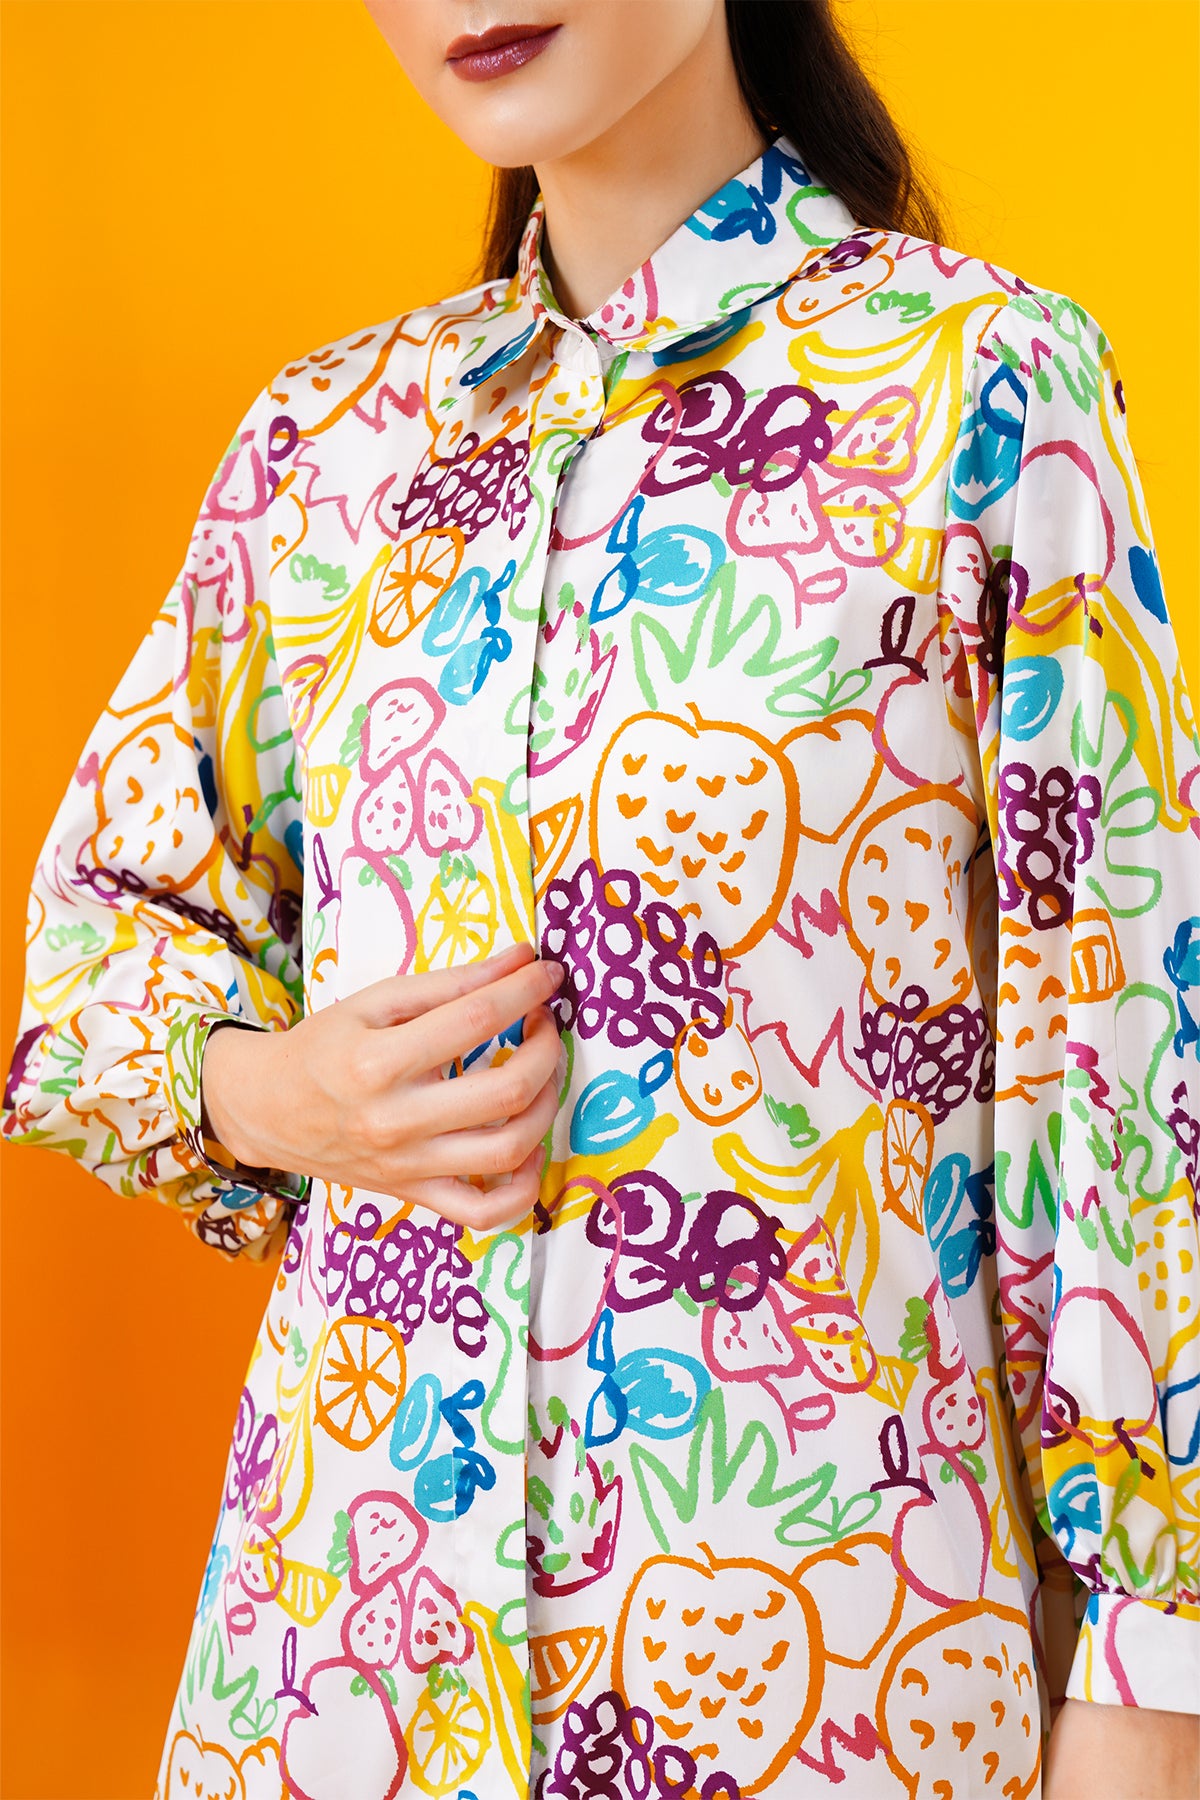 Ameena Tunic Shirt - Multicolor